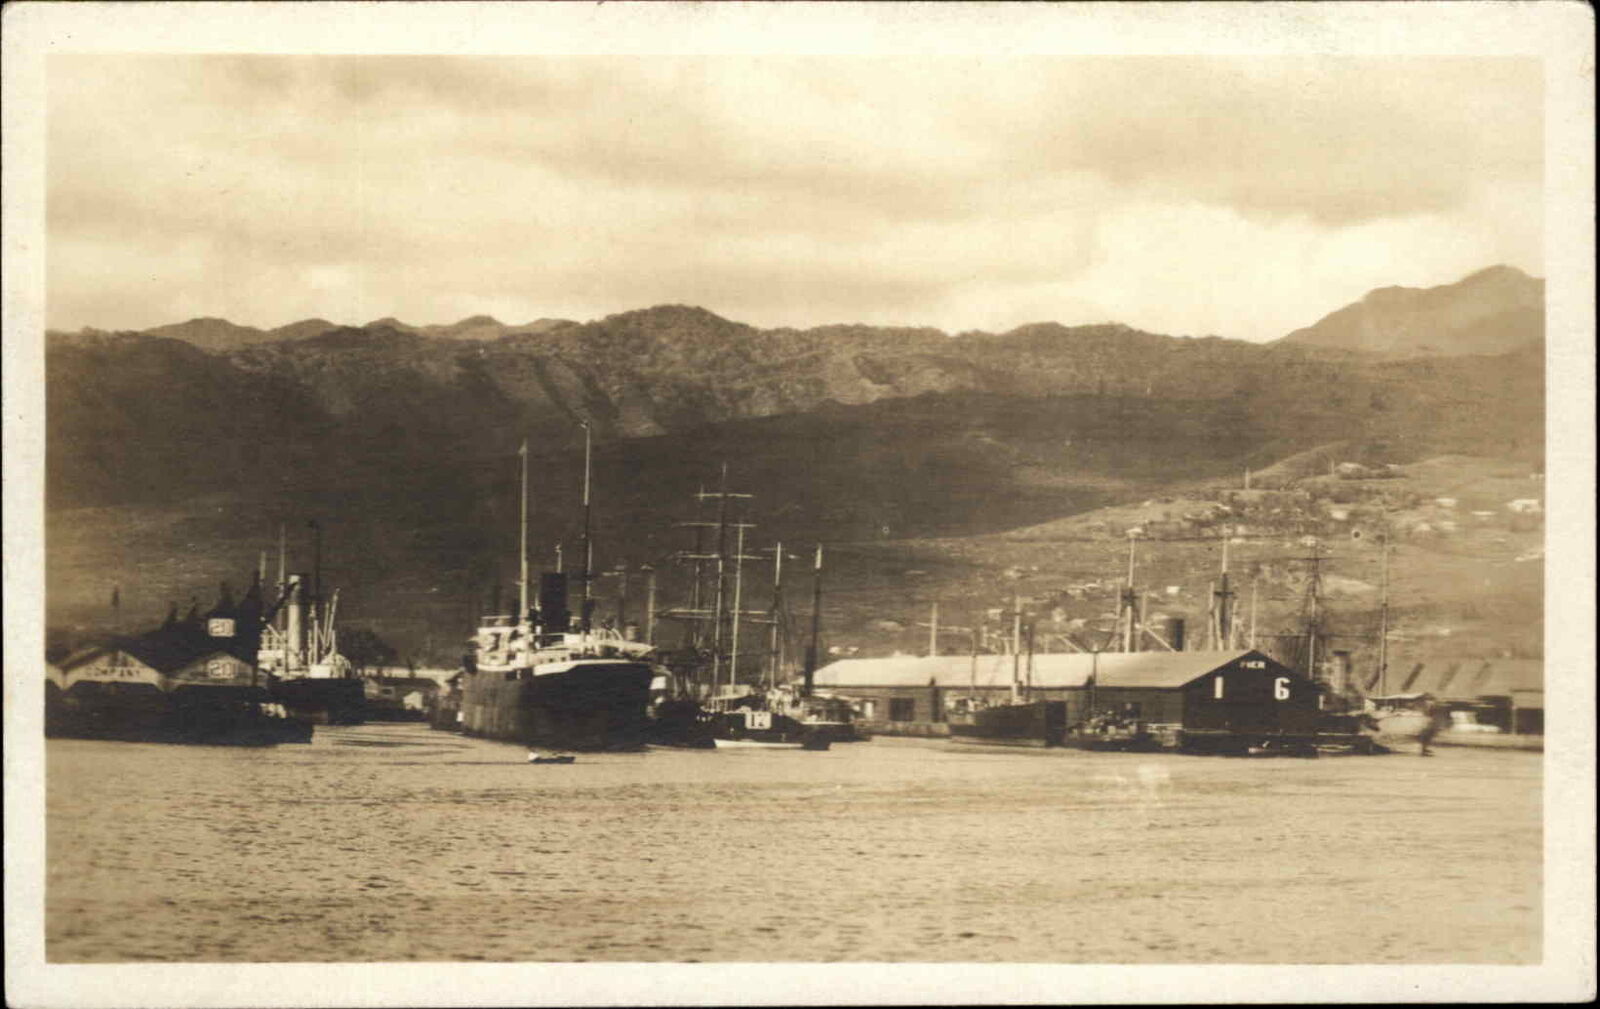 Oahu Hawaii HI Dock Scene Ship c1920s-30s Real Photo Postcard